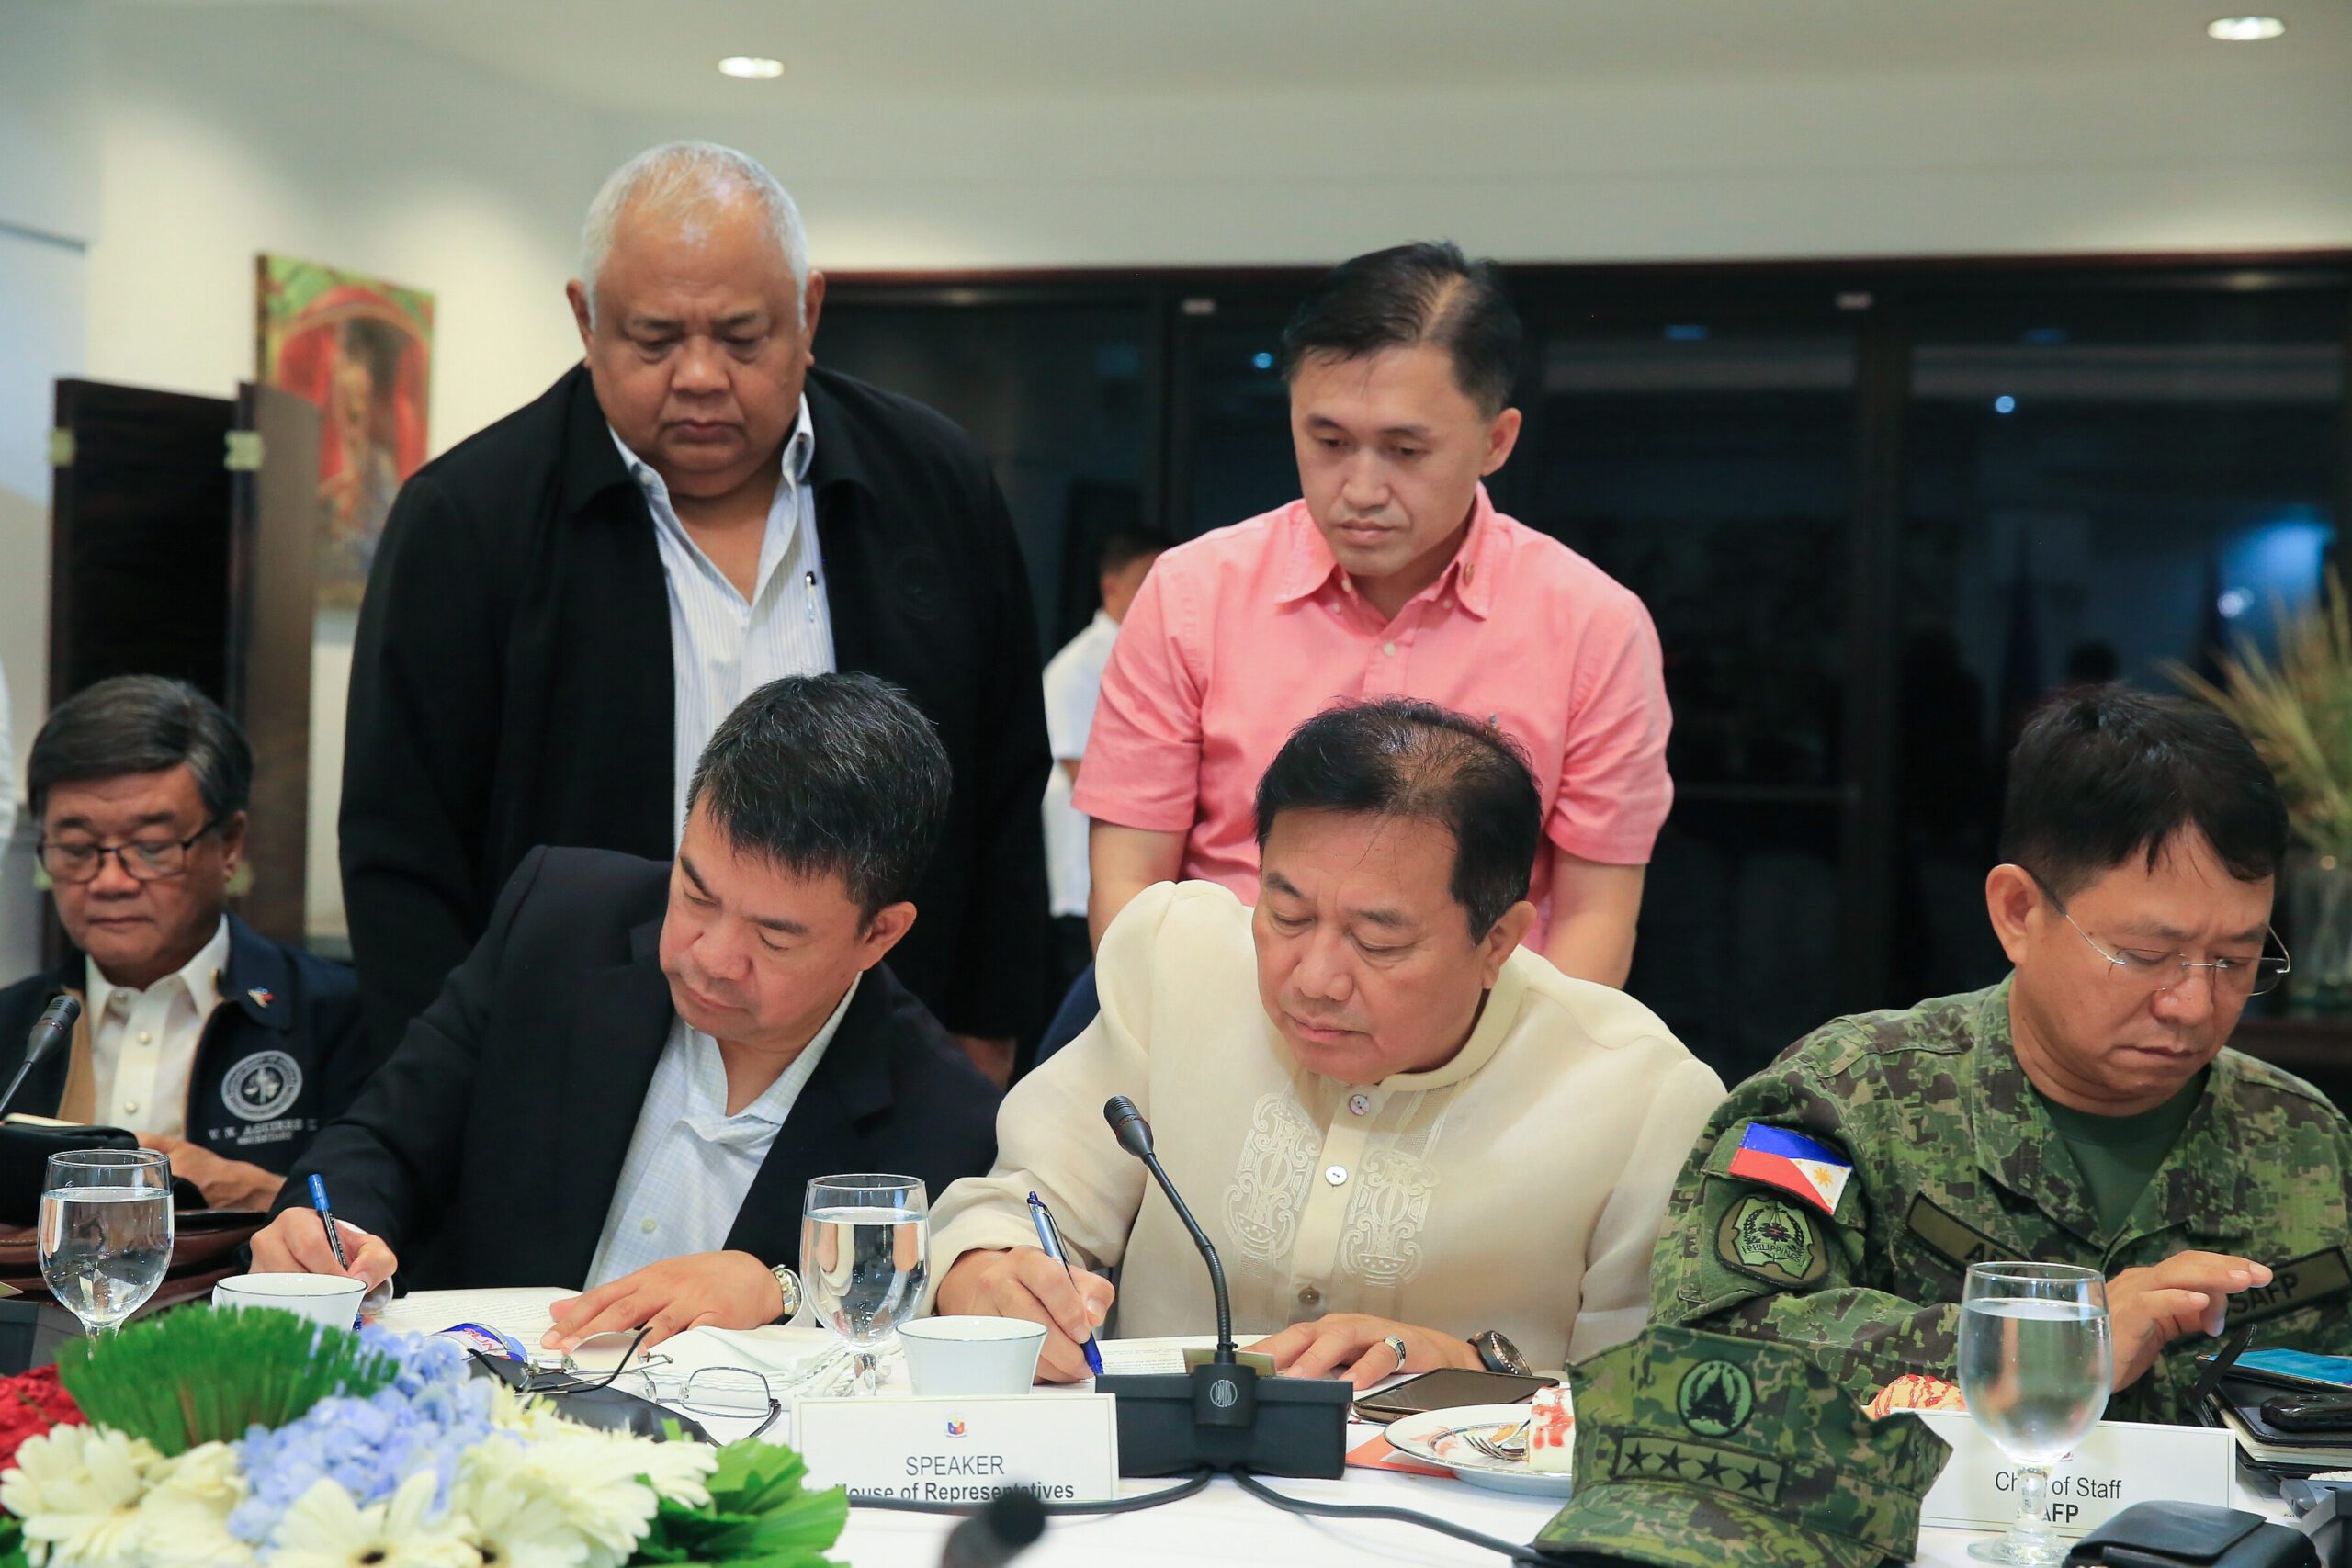 Congress to ignore any SC martial law order – Alvarez